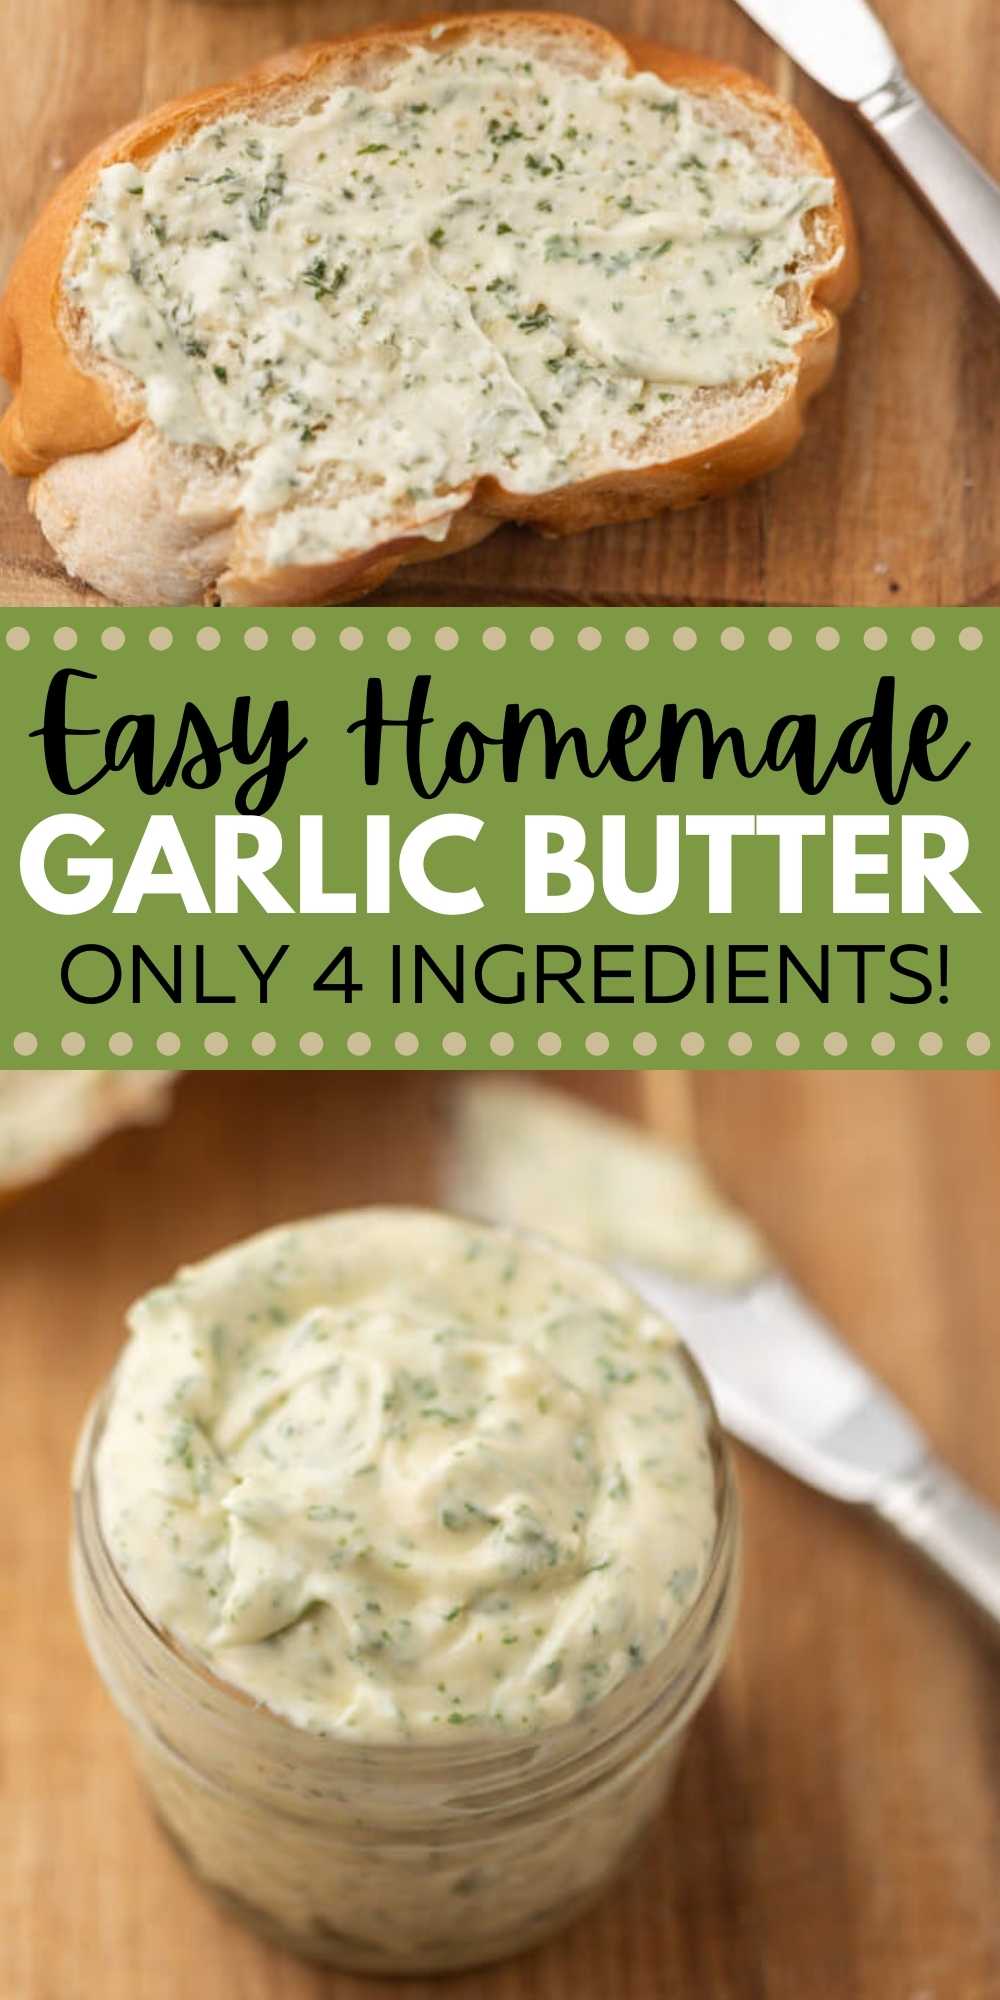 Garlic butter recipe - homemade garlic butter recipe